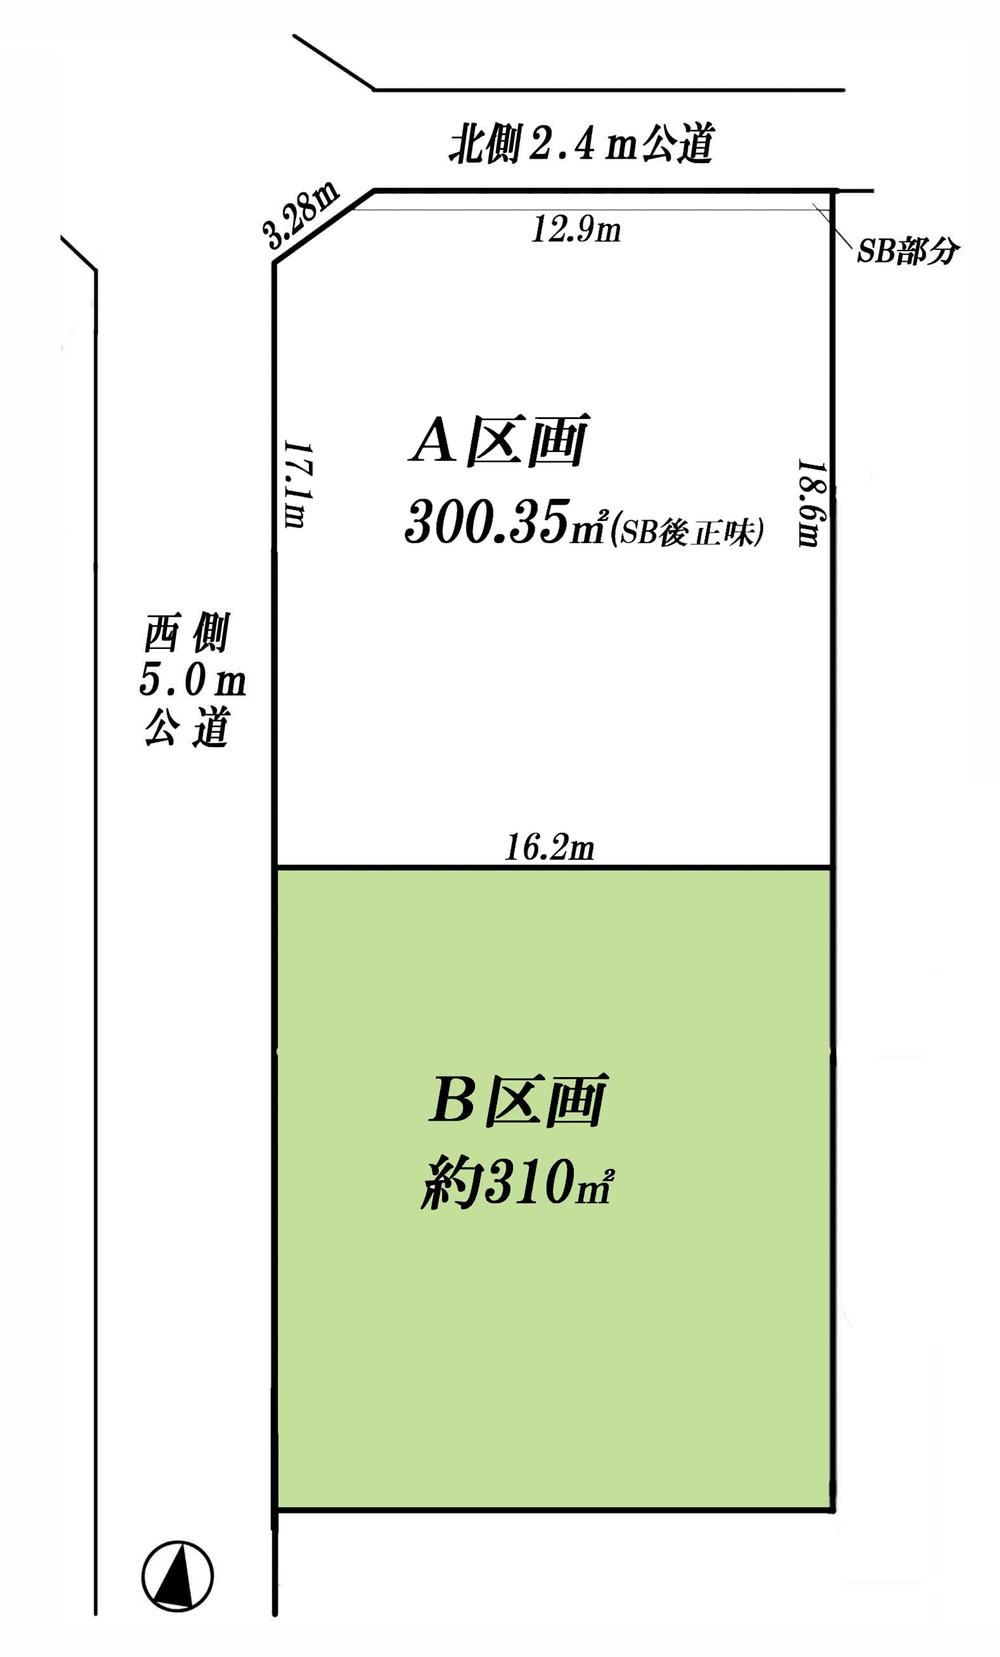 Compartment figure. Land price 7.5 million yen, Land area 310 sq m